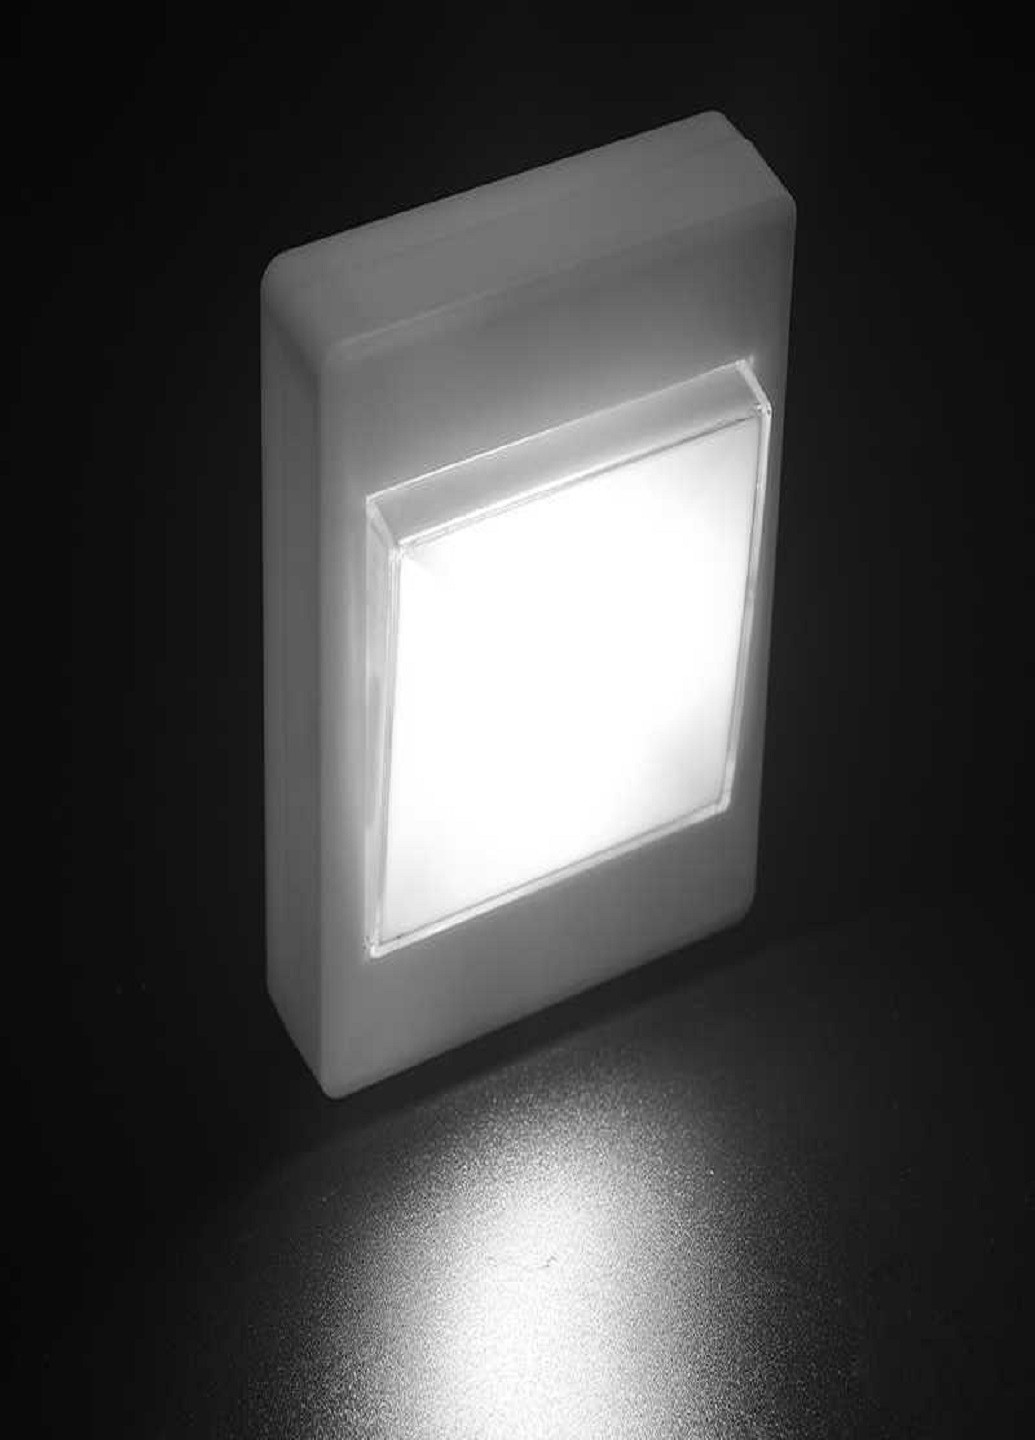 LED лампа вимикач світильник на батарейках 3Вт VTech (253319196)